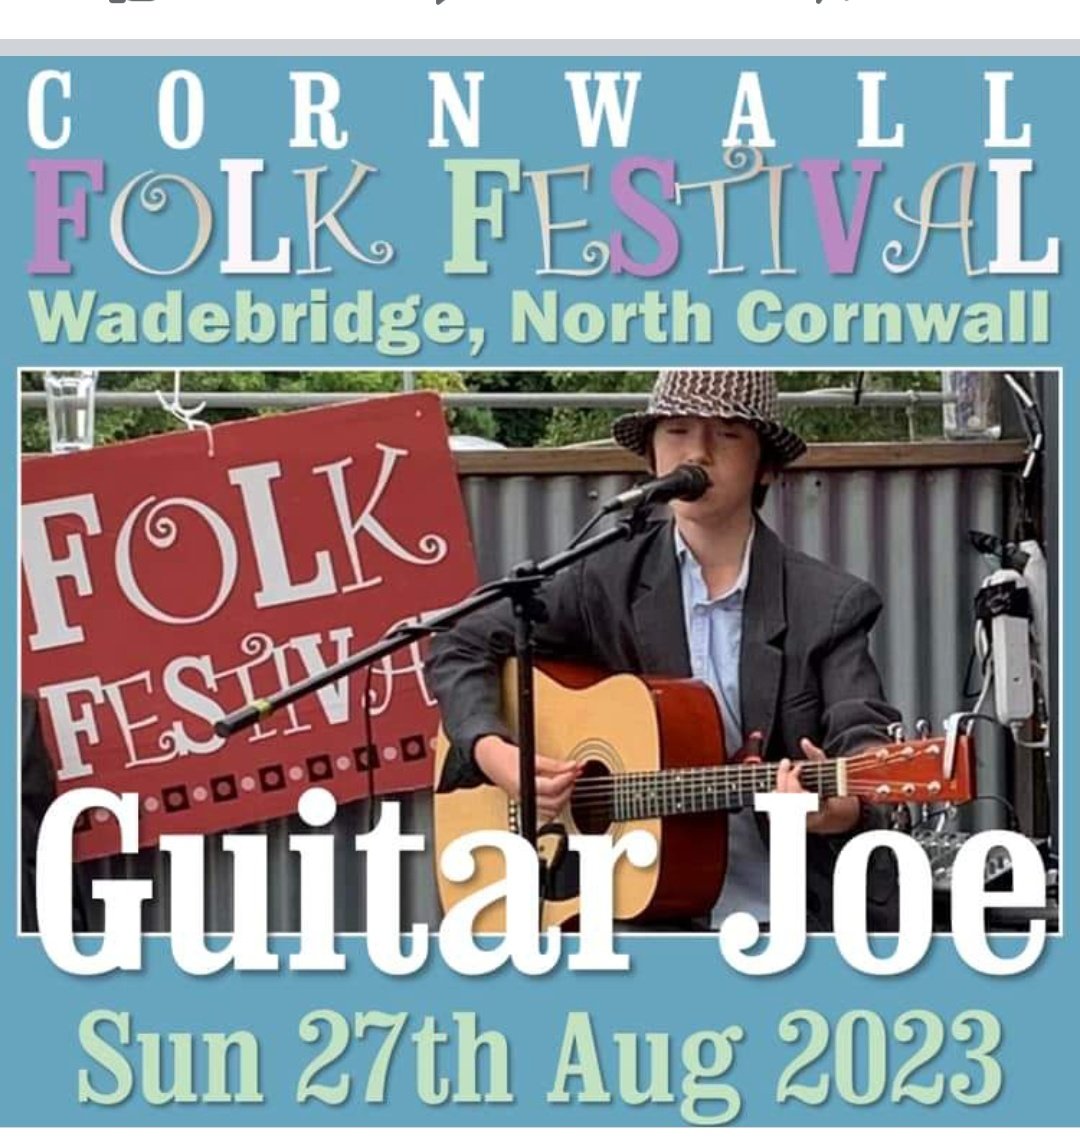 12pm on Molesworth Street, Wadebridge, Saturday 27th August as part of the @CornwallFolk Festival 🔥